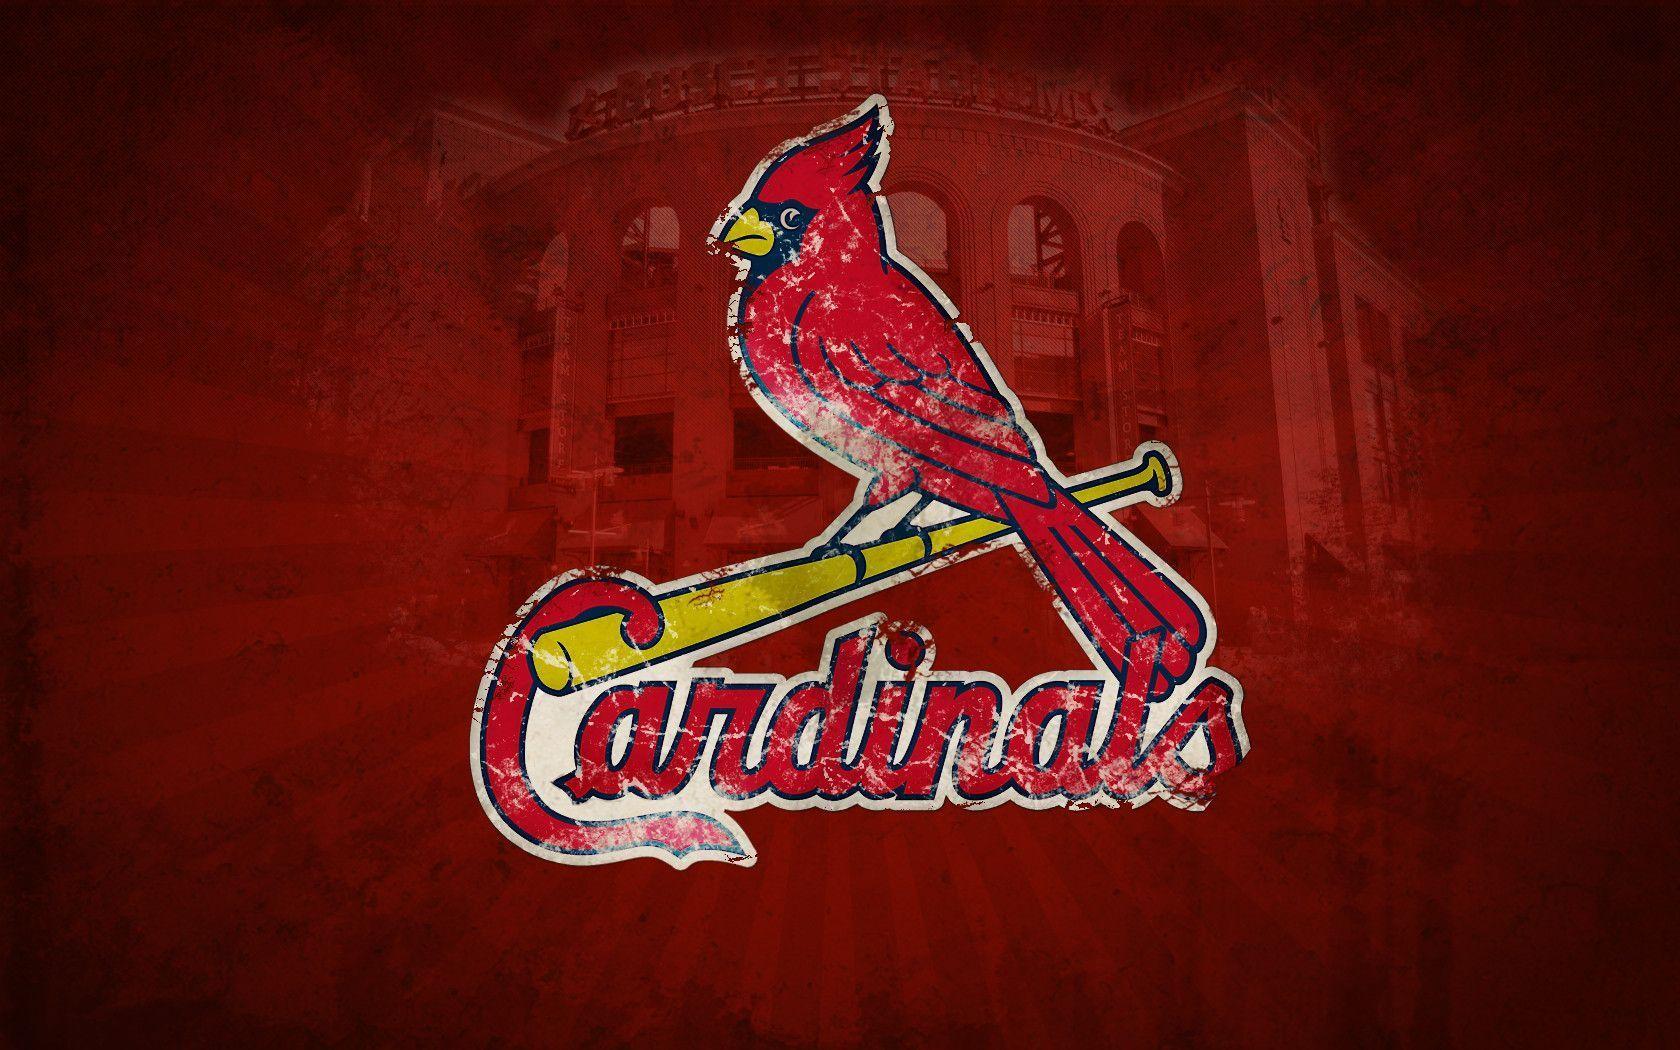 St. Louis Cardinals wallpaper. St. Louis Cardinals background